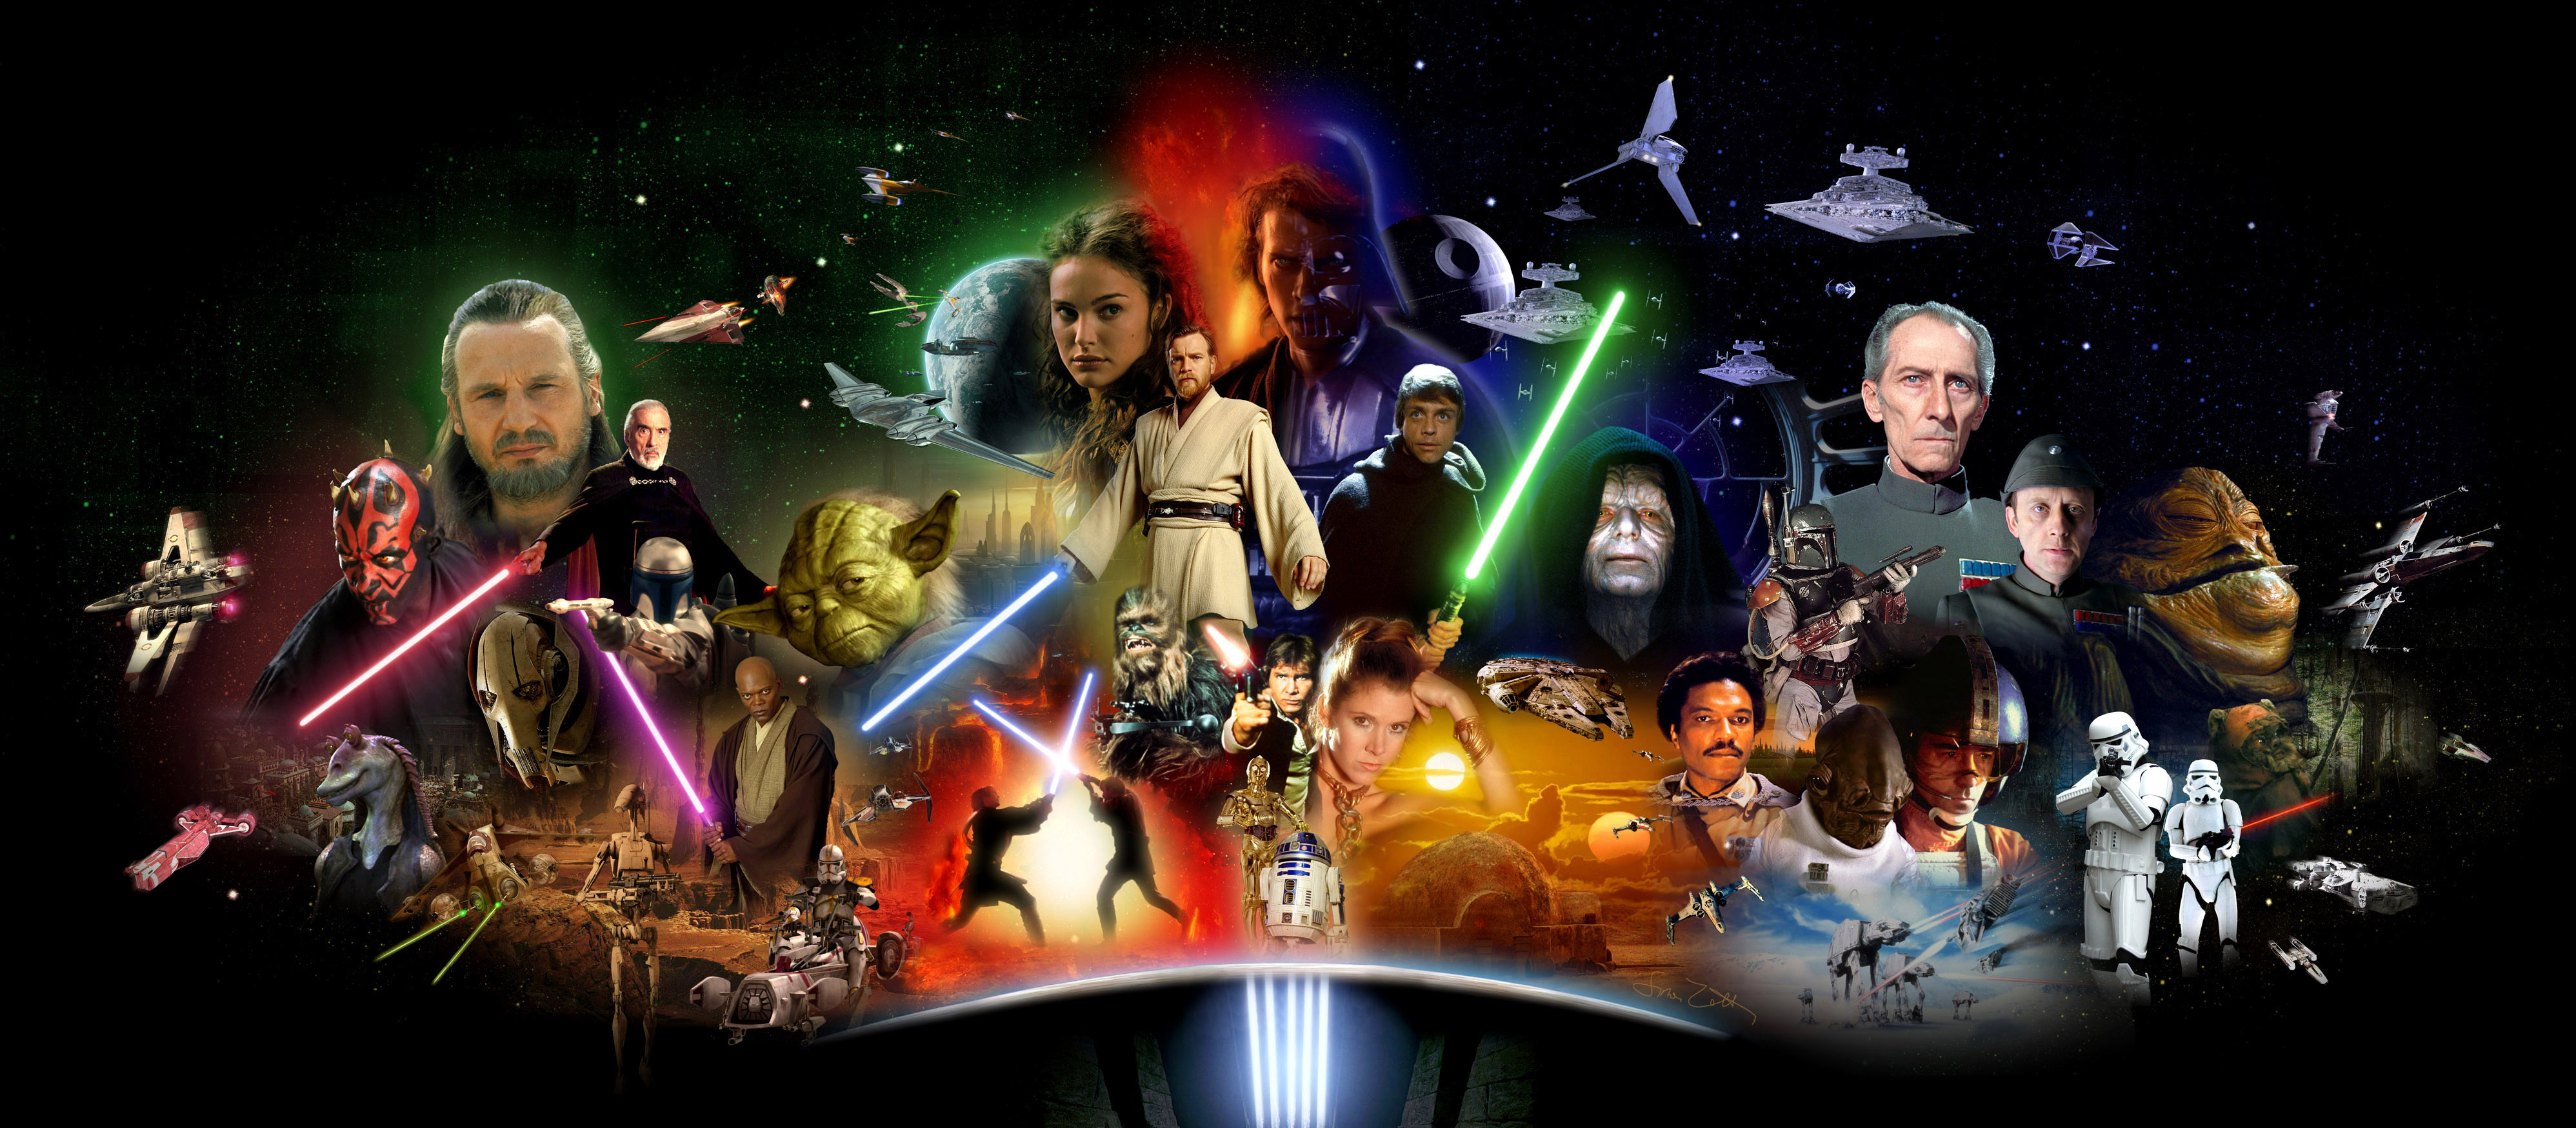 Star Wars Gününüz Kutlu Olsun!